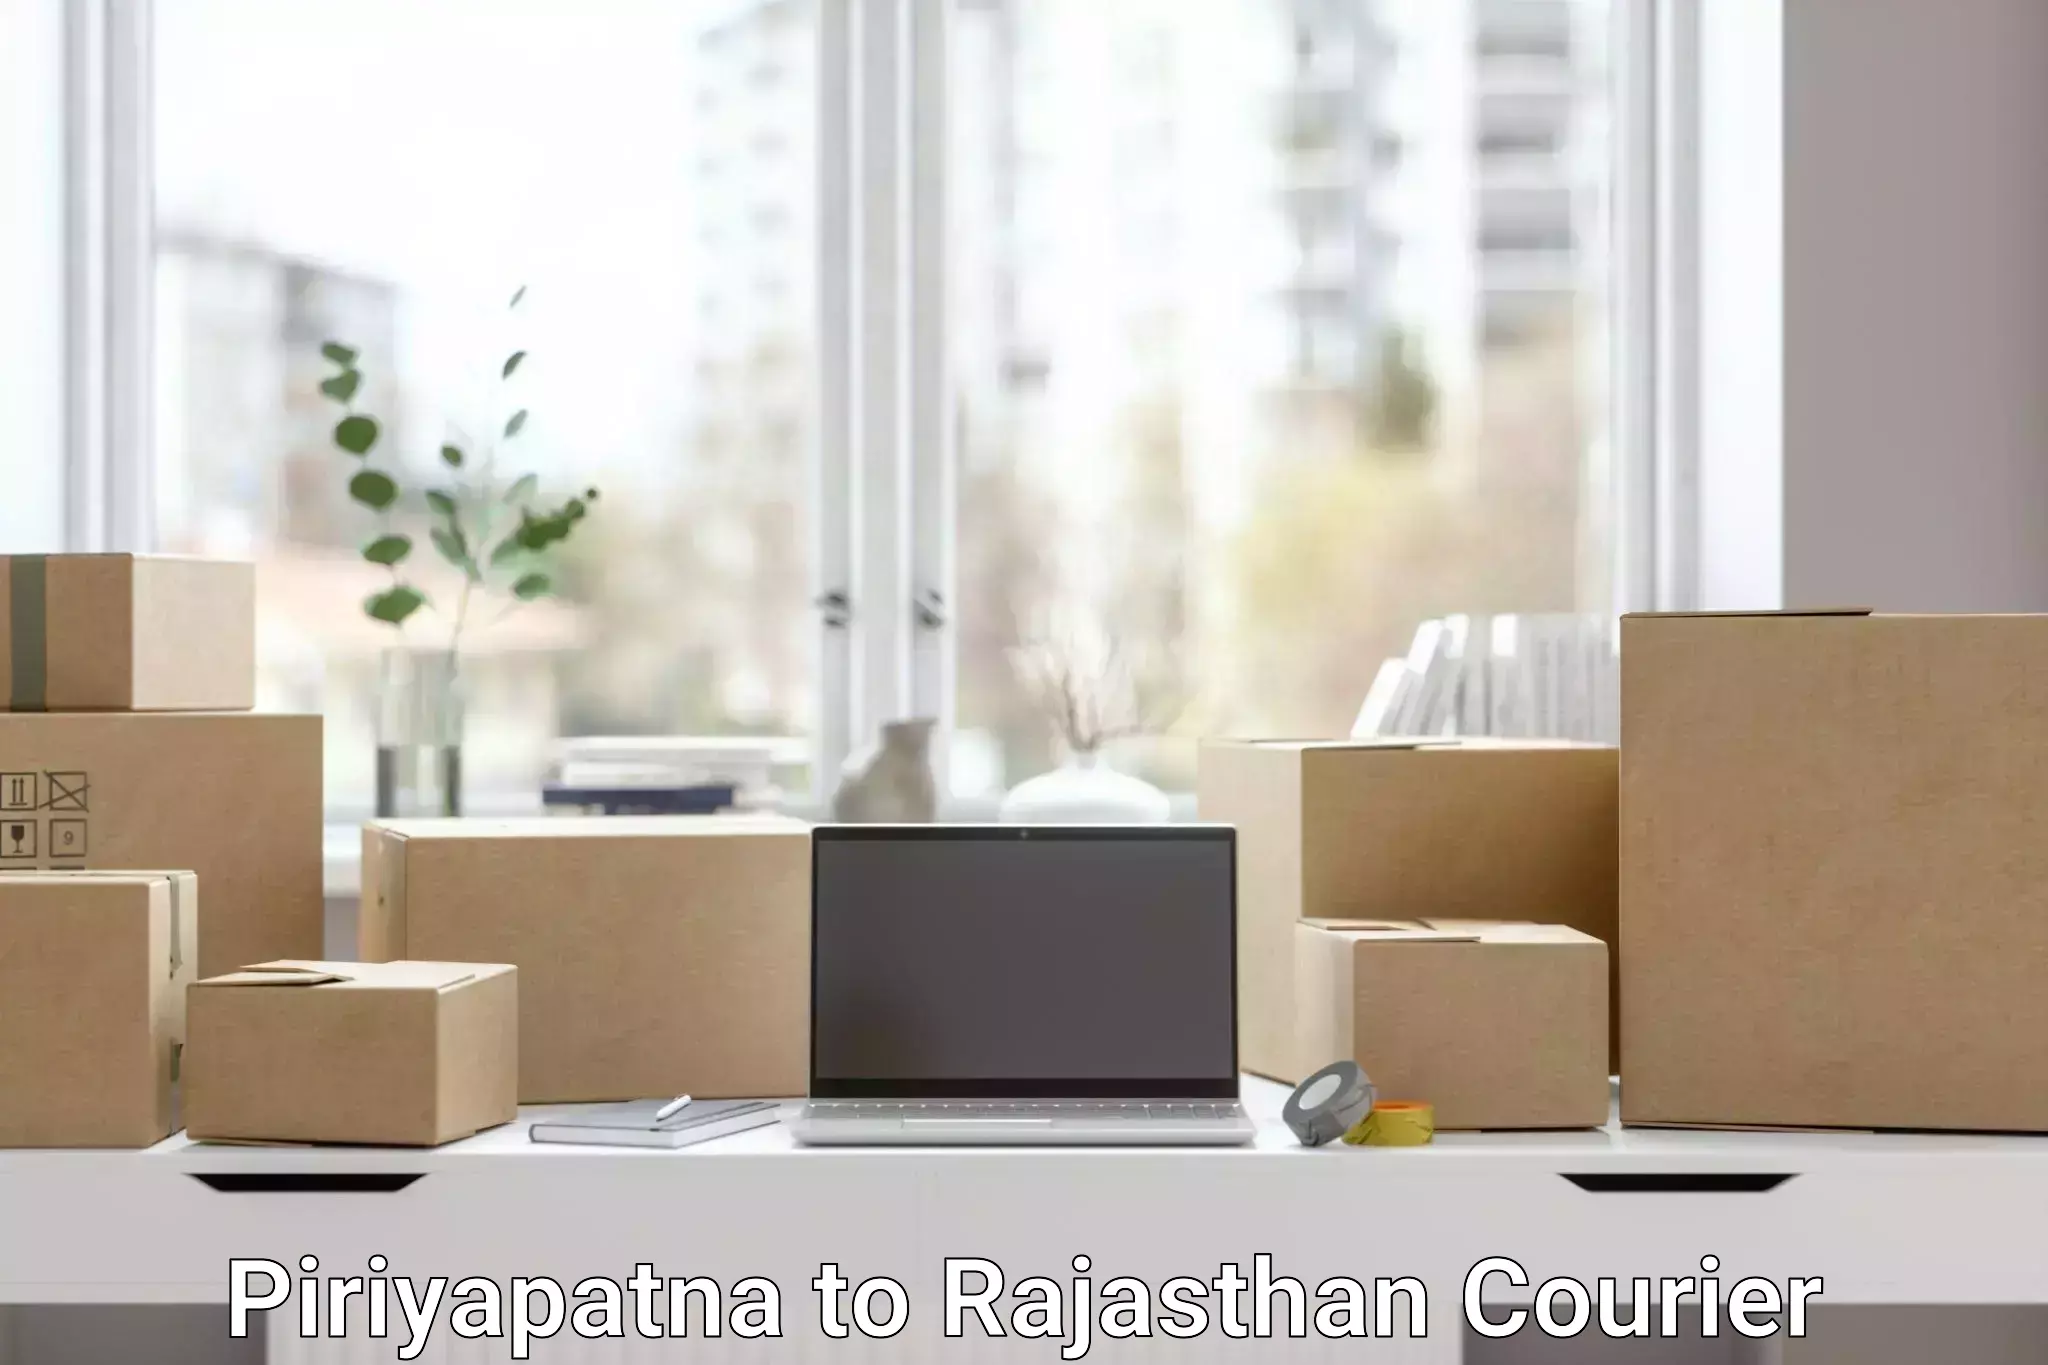 Package delivery network Piriyapatna to Sri Vijaynagar